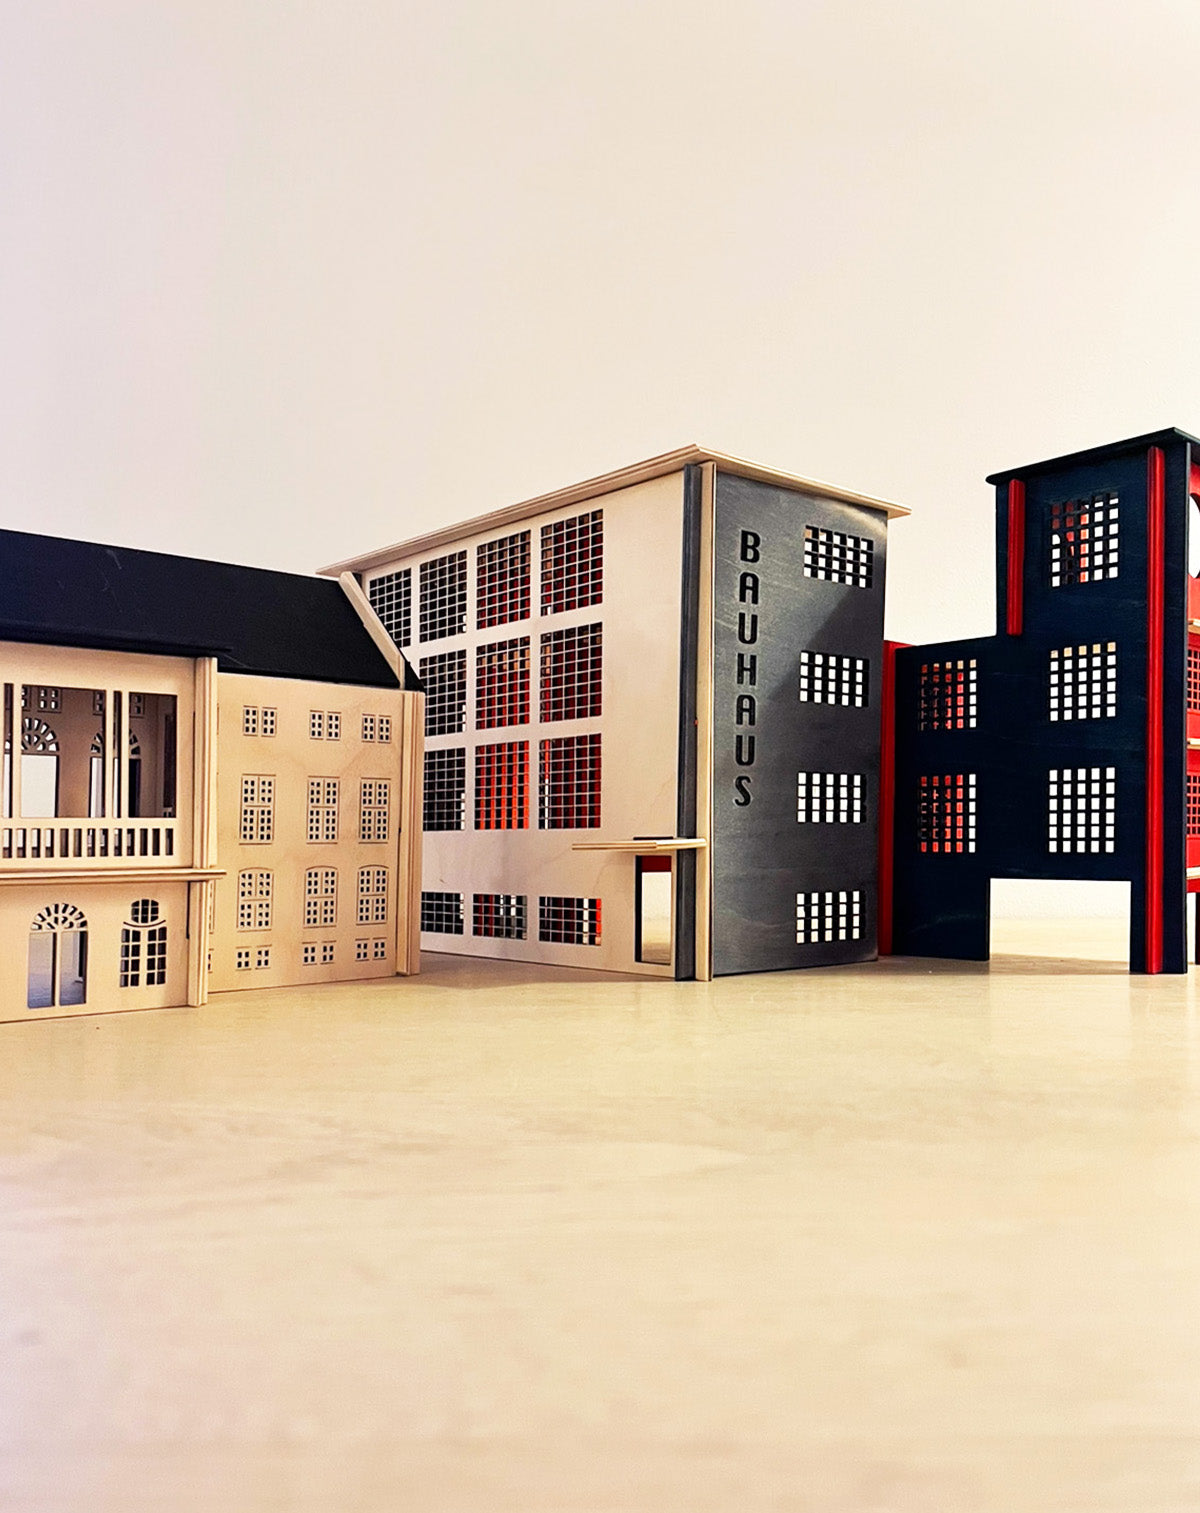 Bauhaus Miniature House